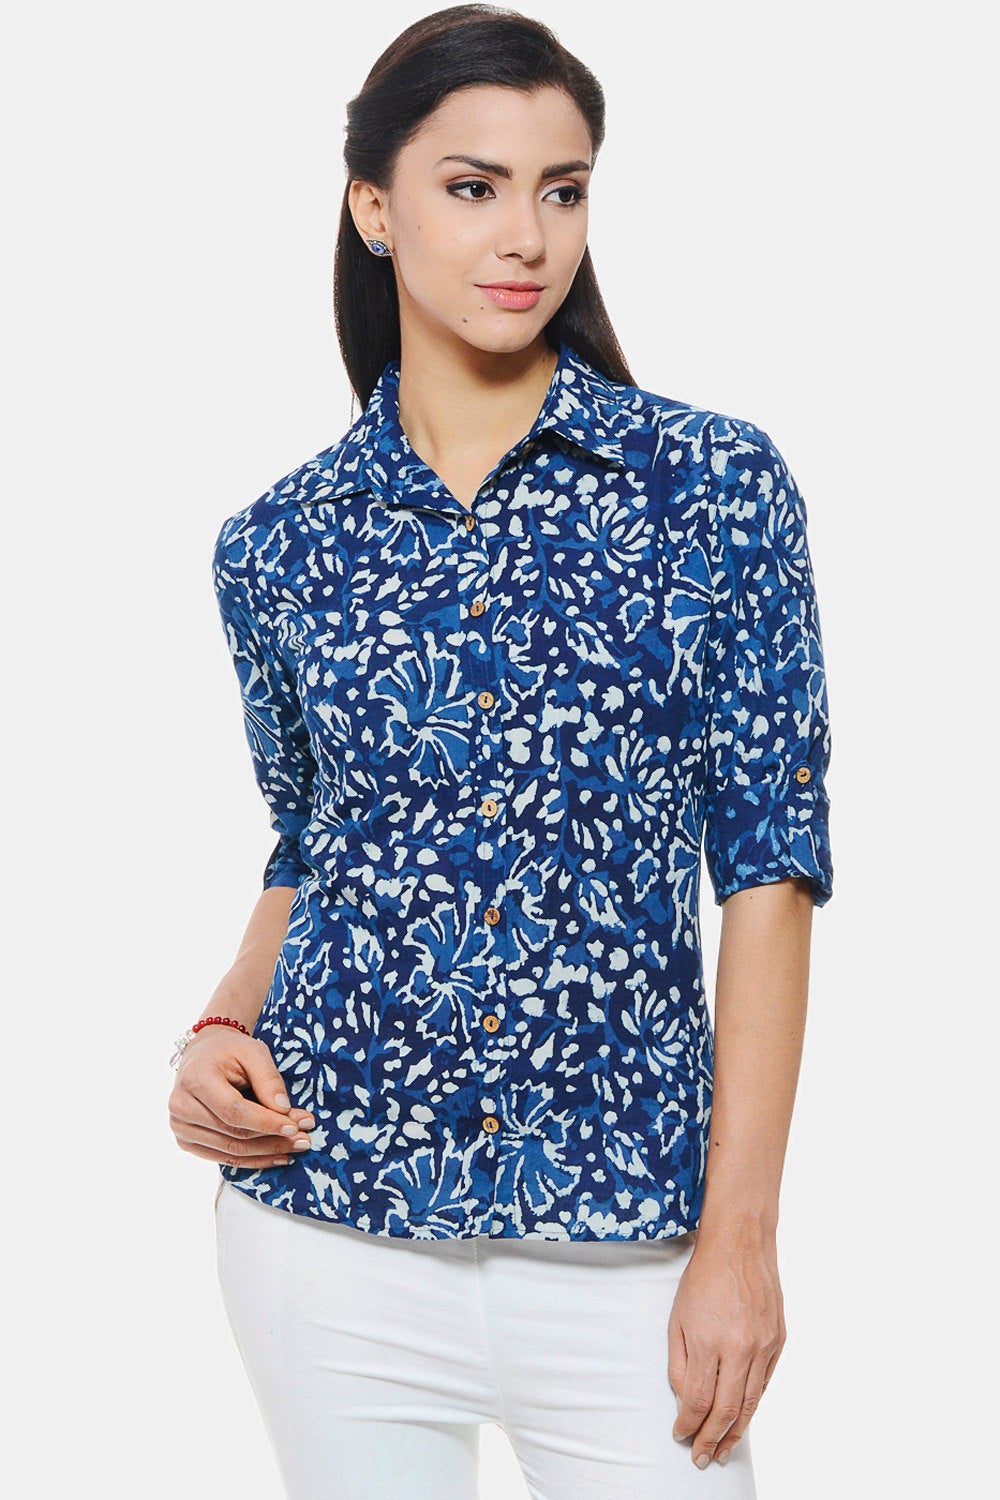 Indigo Hand block printed Shirt in floral design